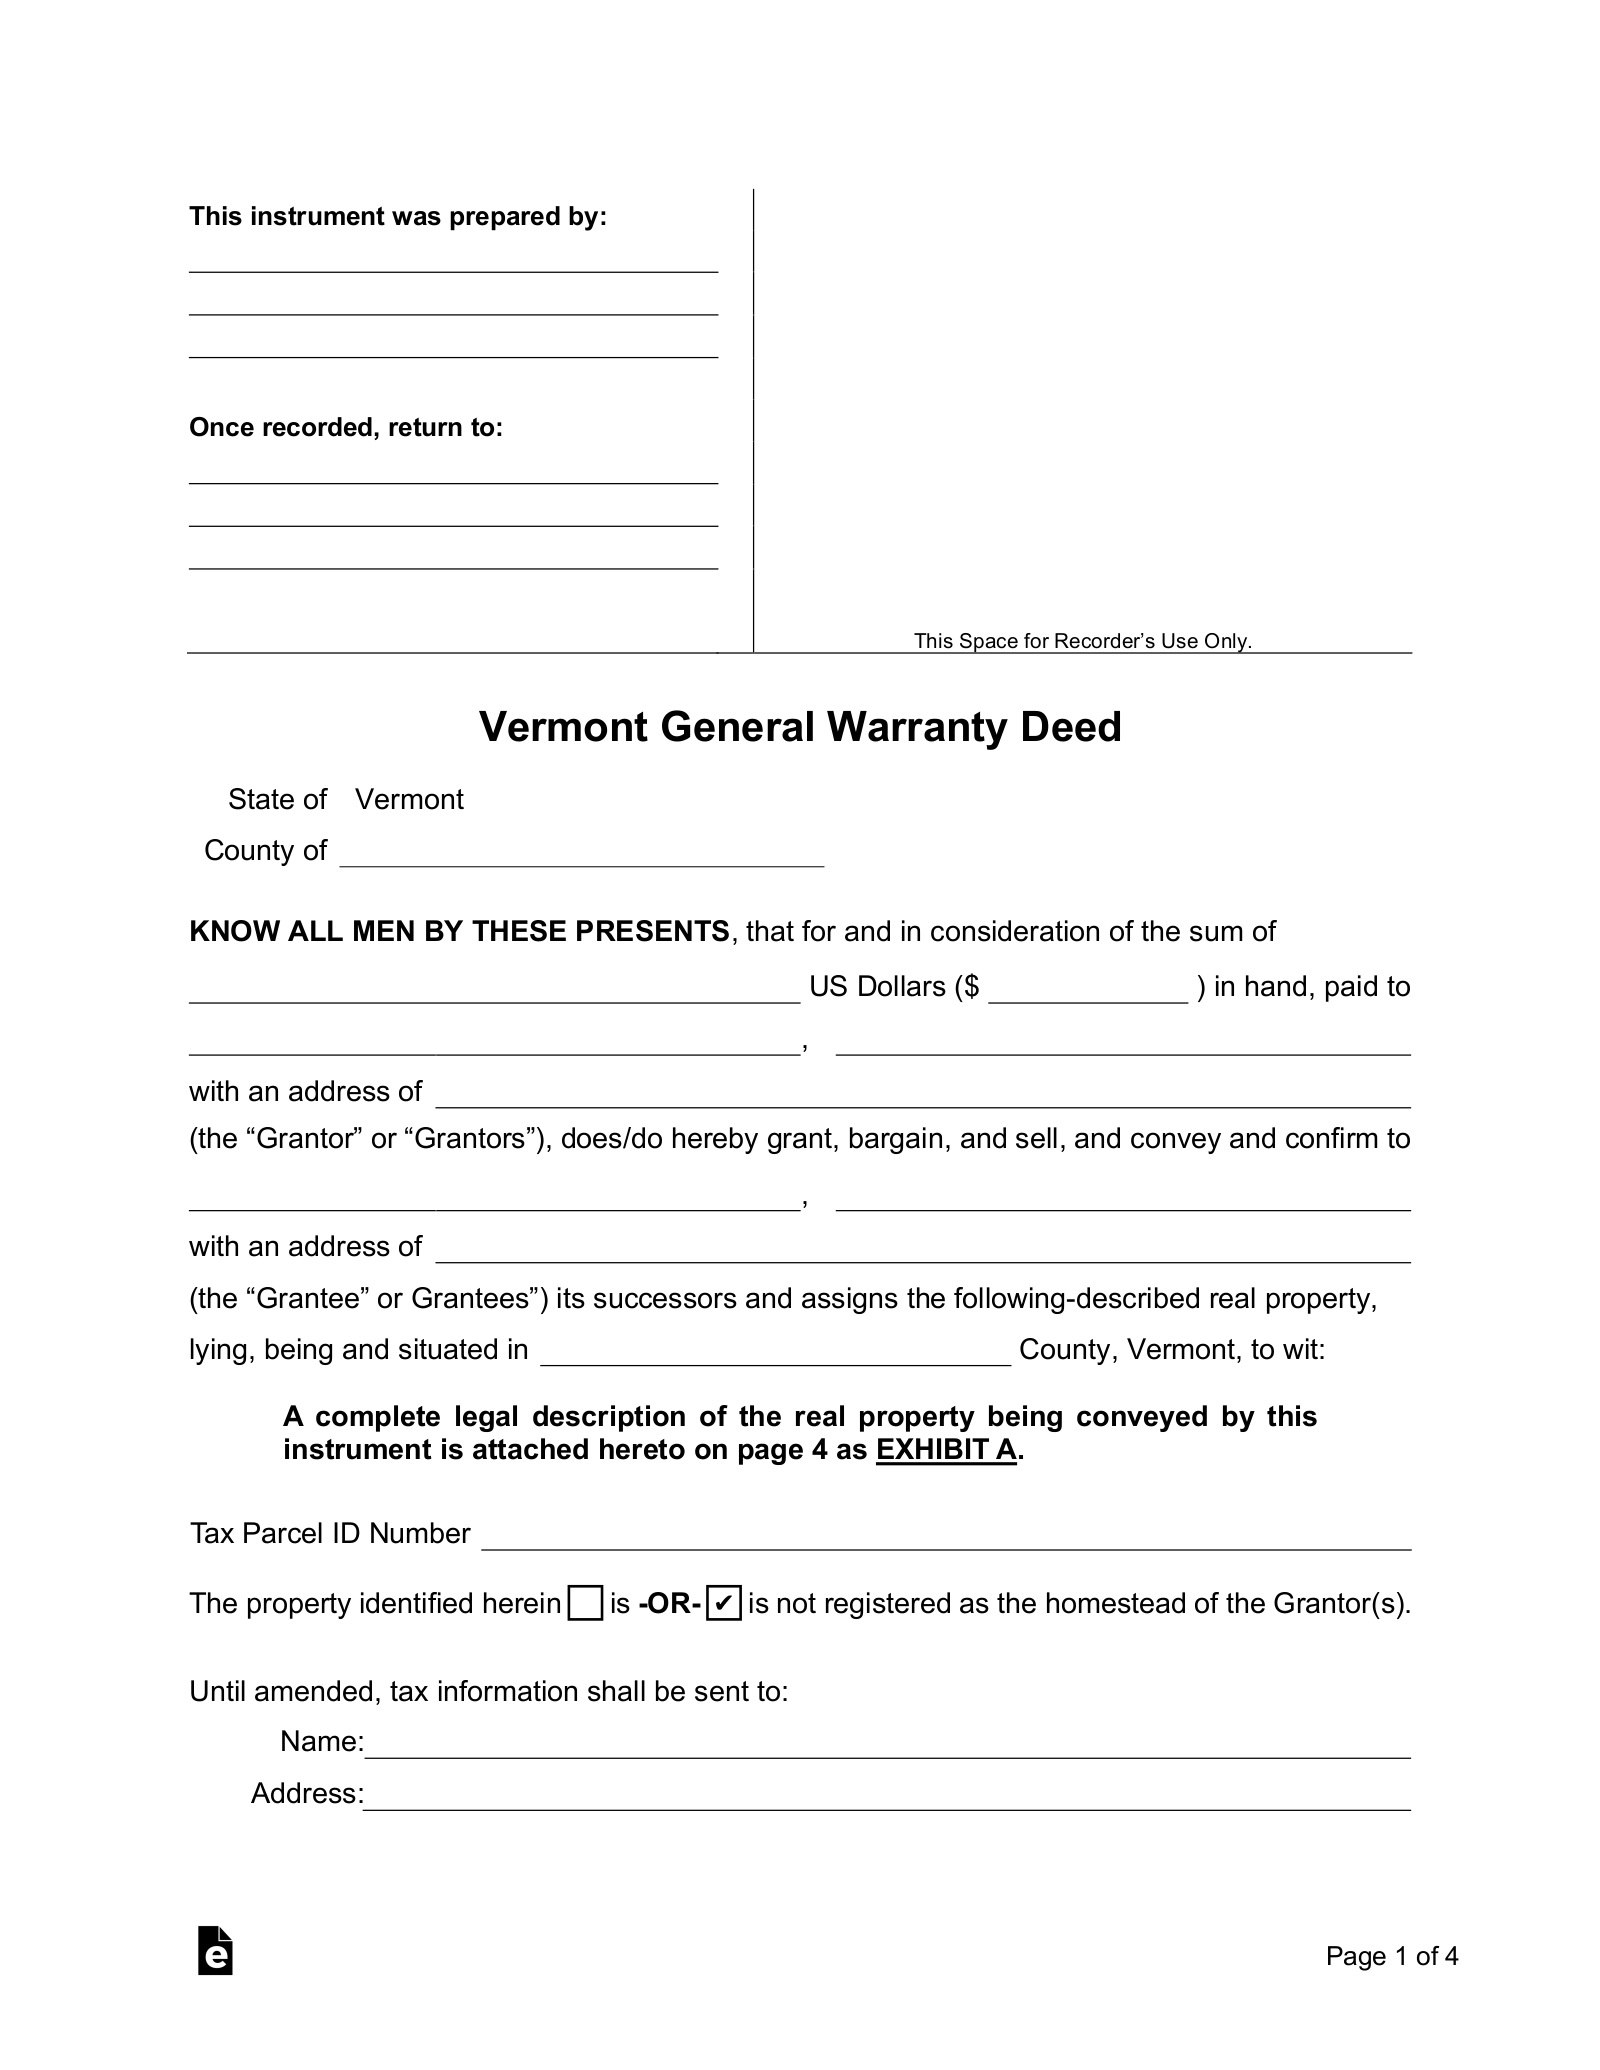 Vermont General Warranty Deed Form